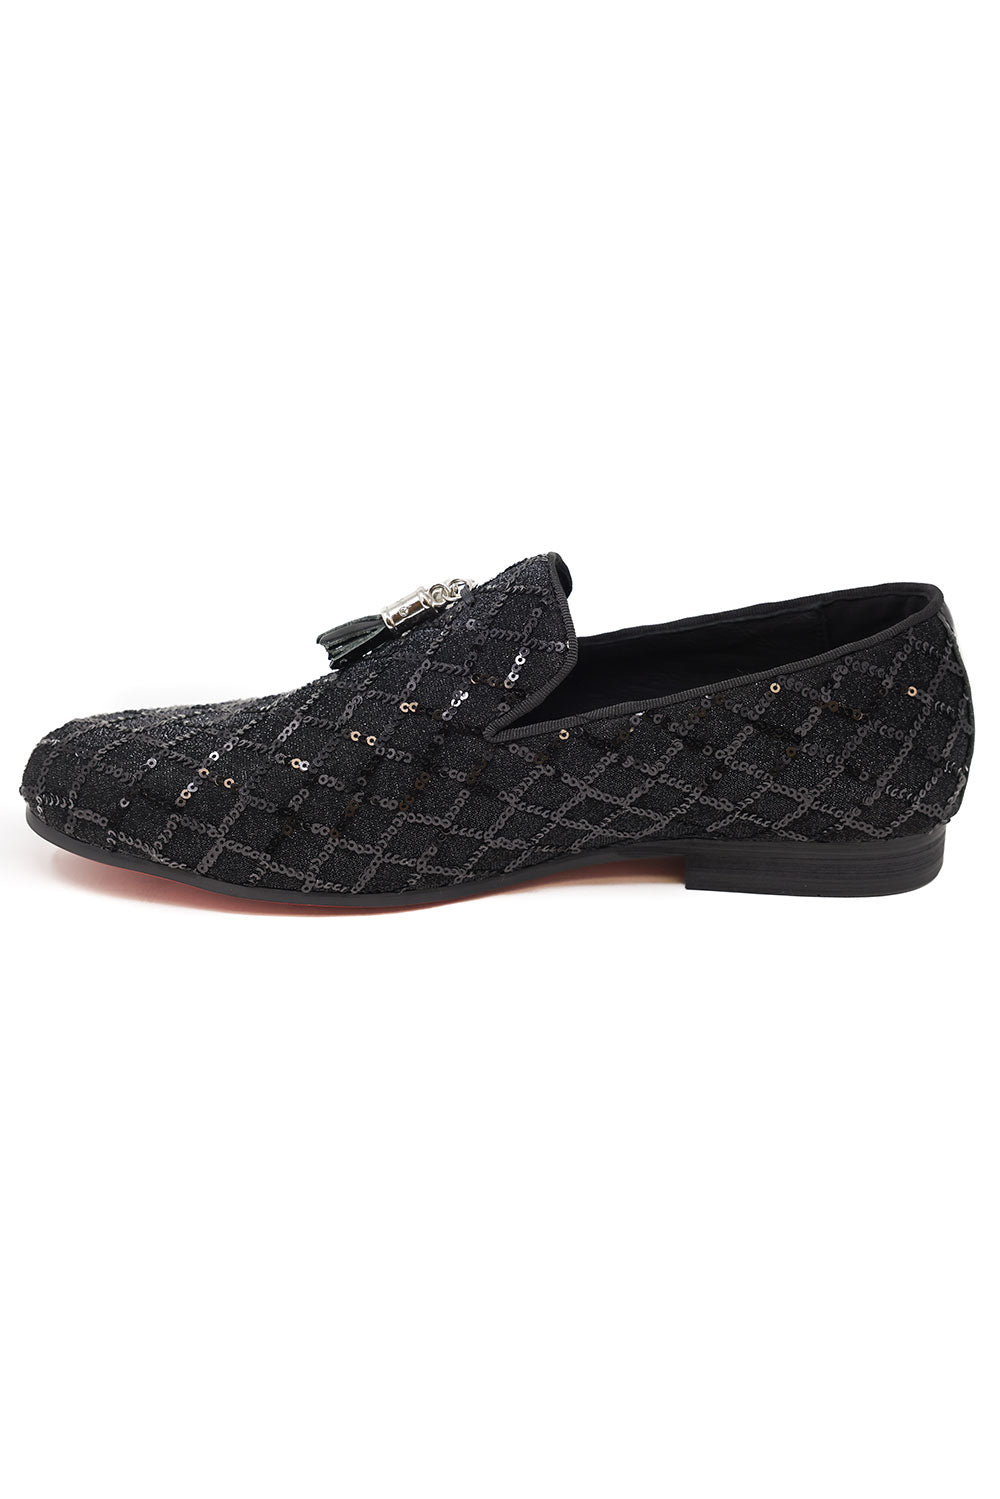 Barabas Men's Sequin Design Tassel Slip On Loafer Shoes 2SH3099